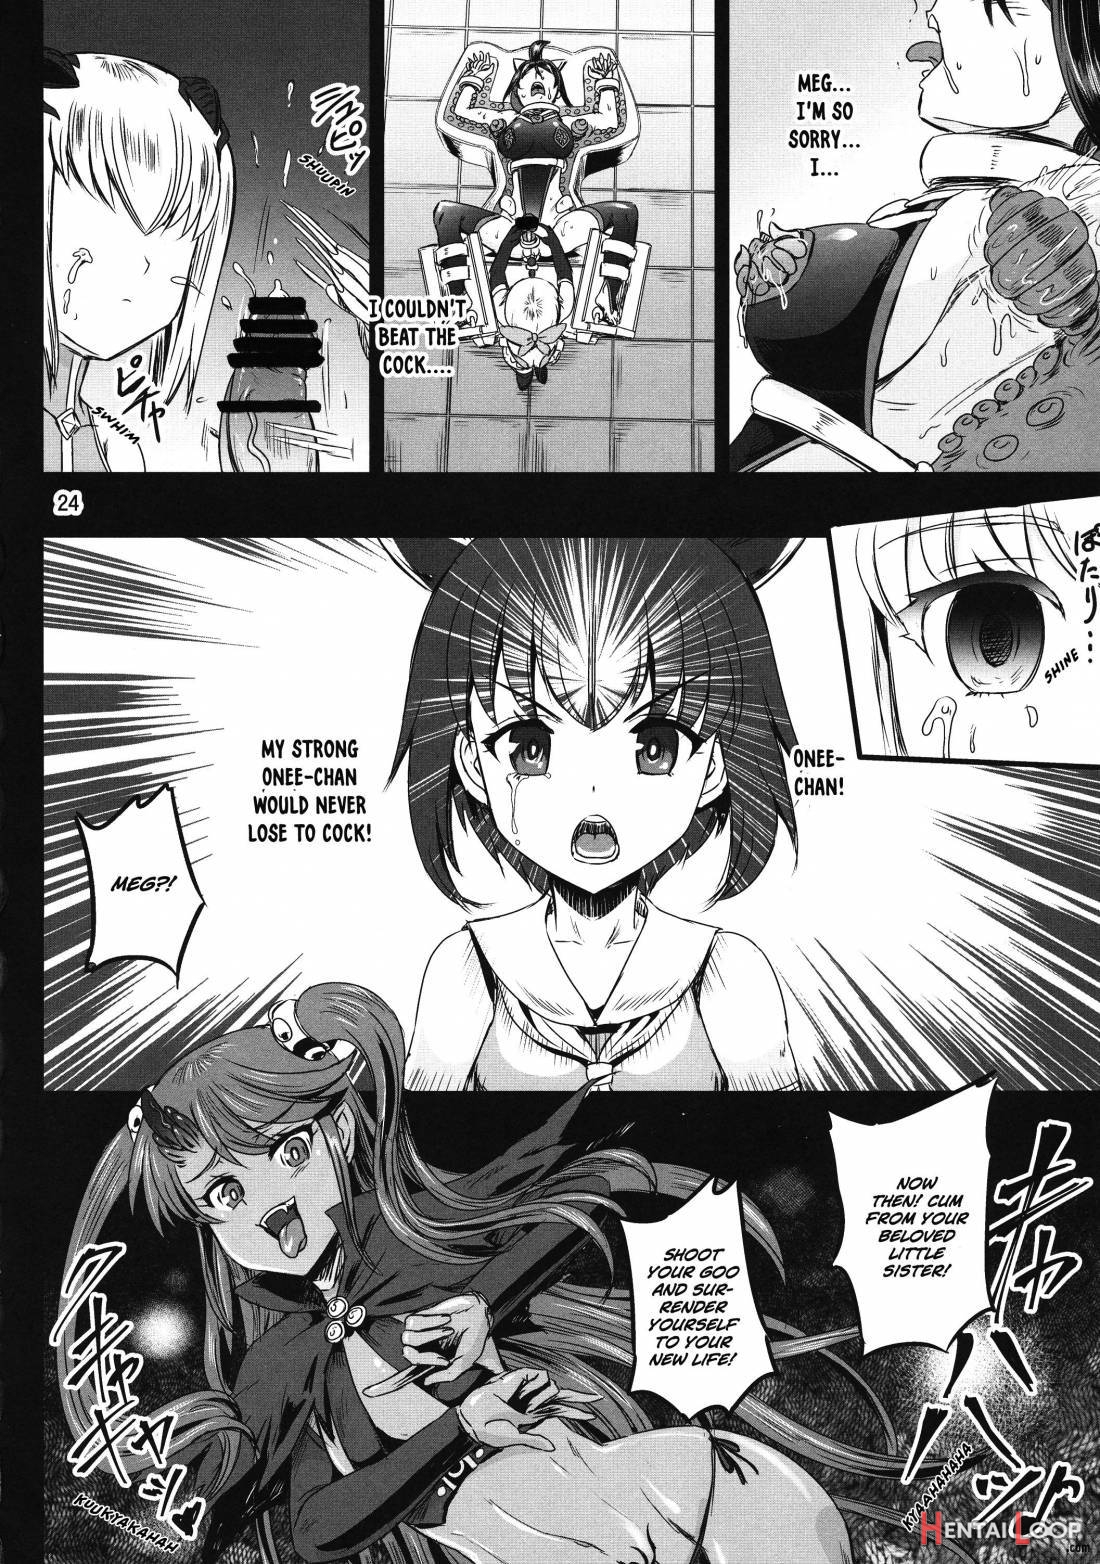 Mahoushoujyo Rensei System EPISODE 02 page 23